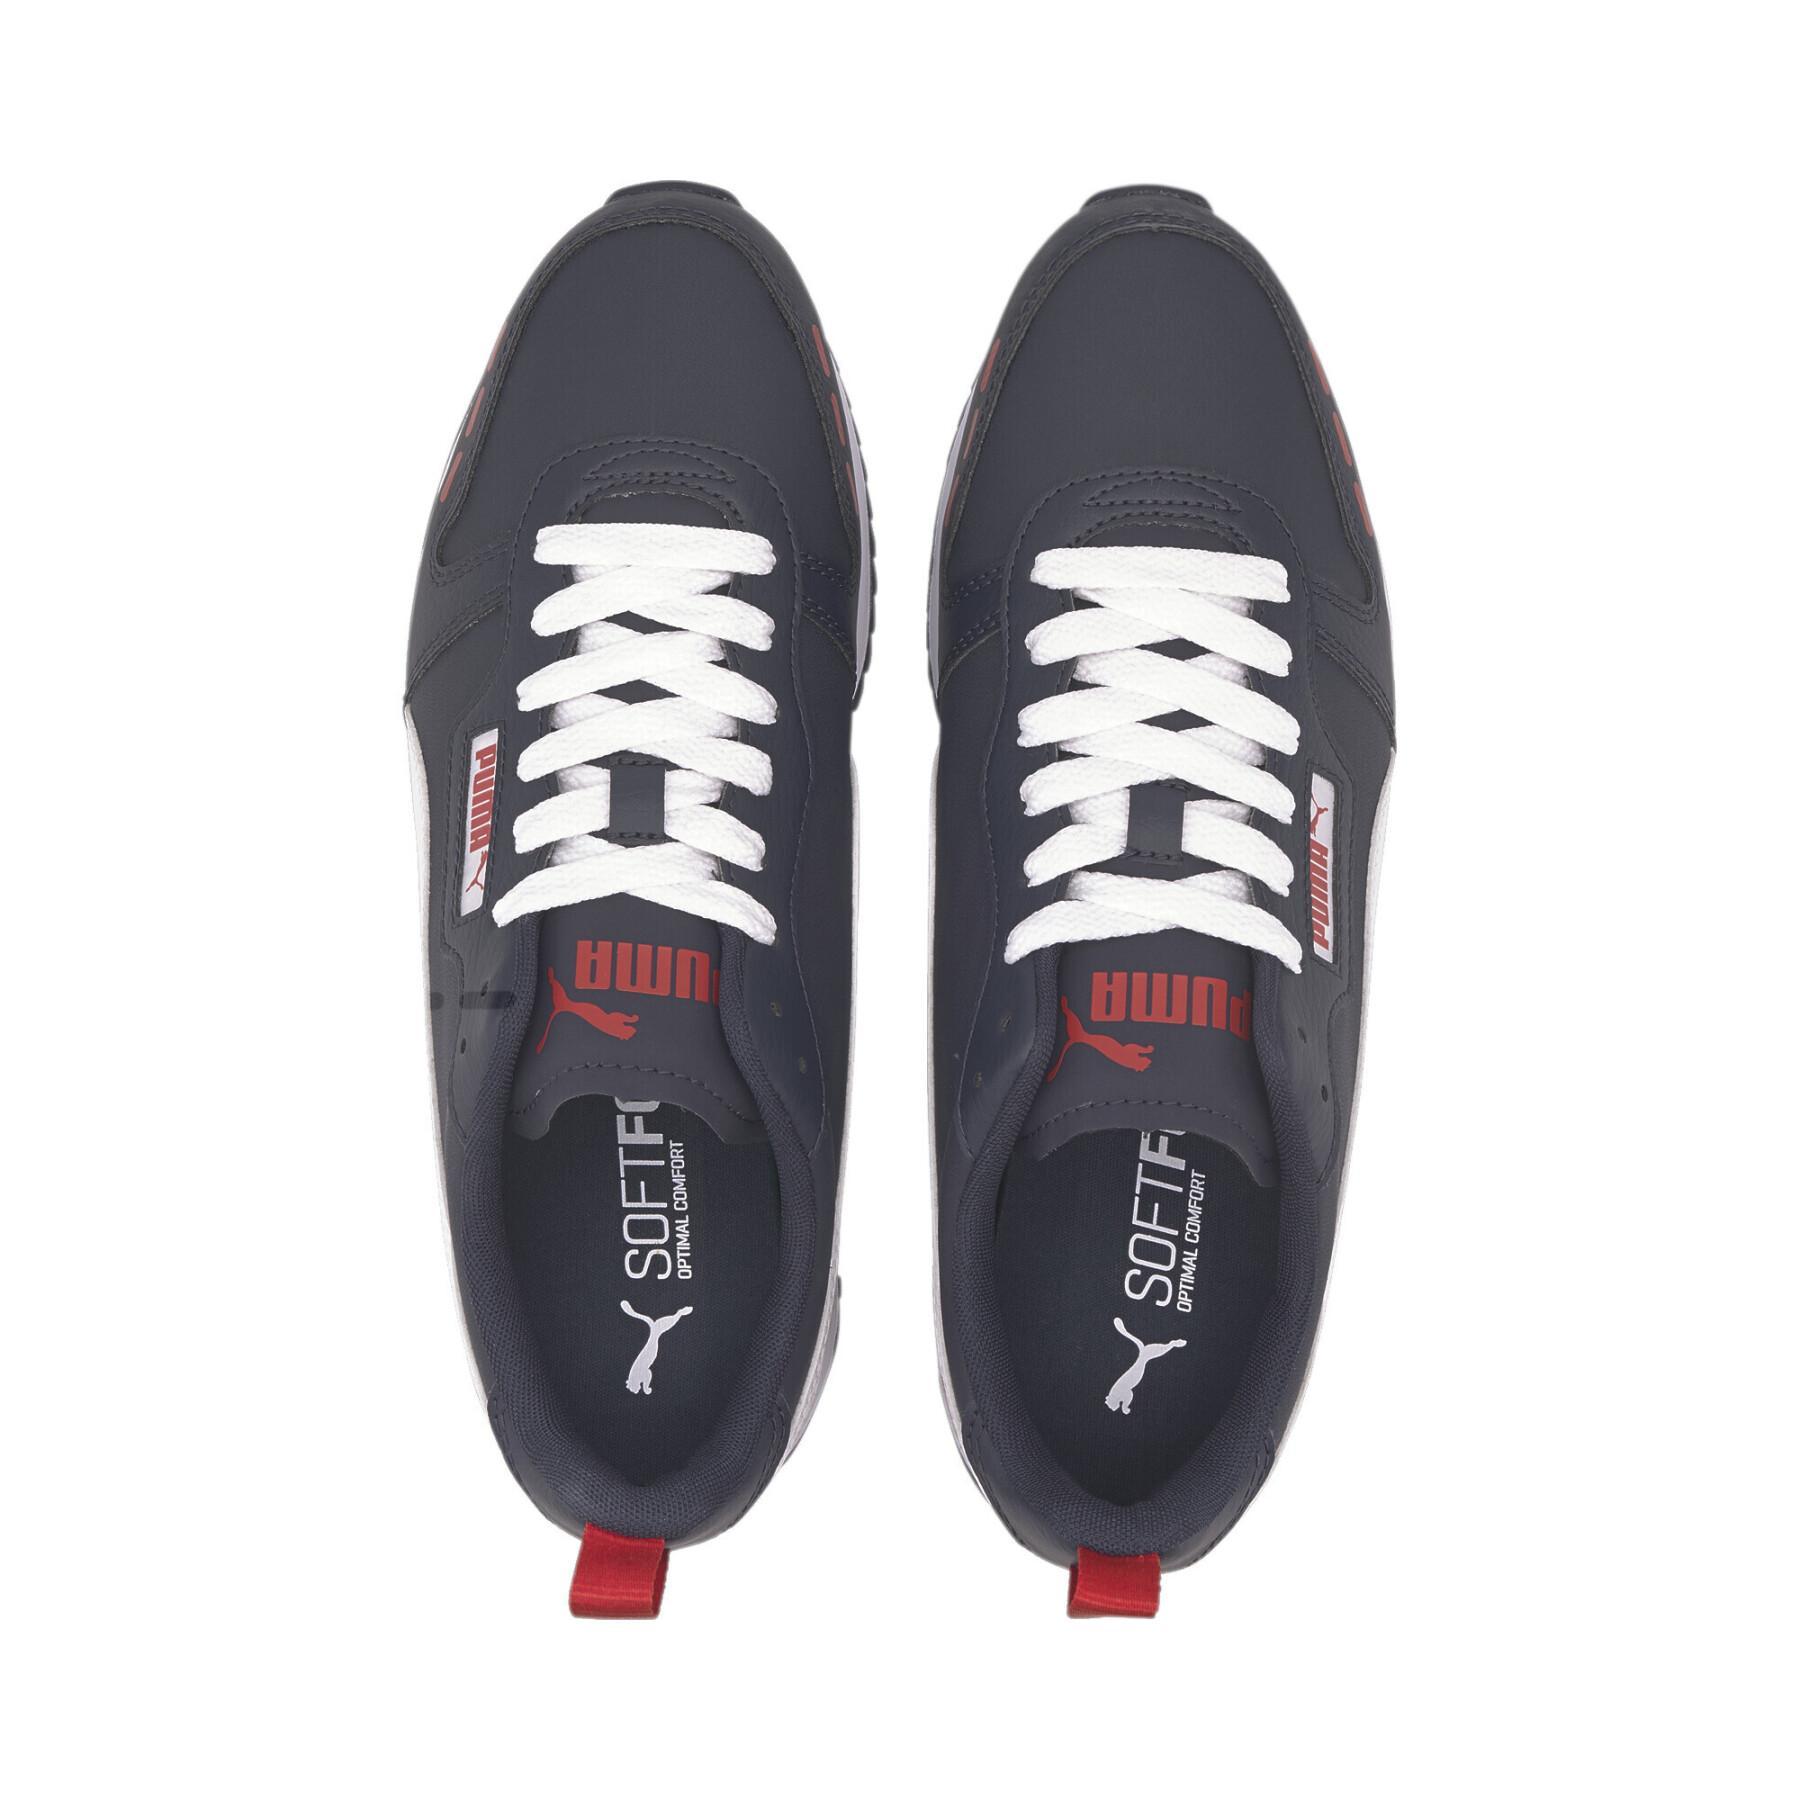 Sneakers Puma R78 Sl